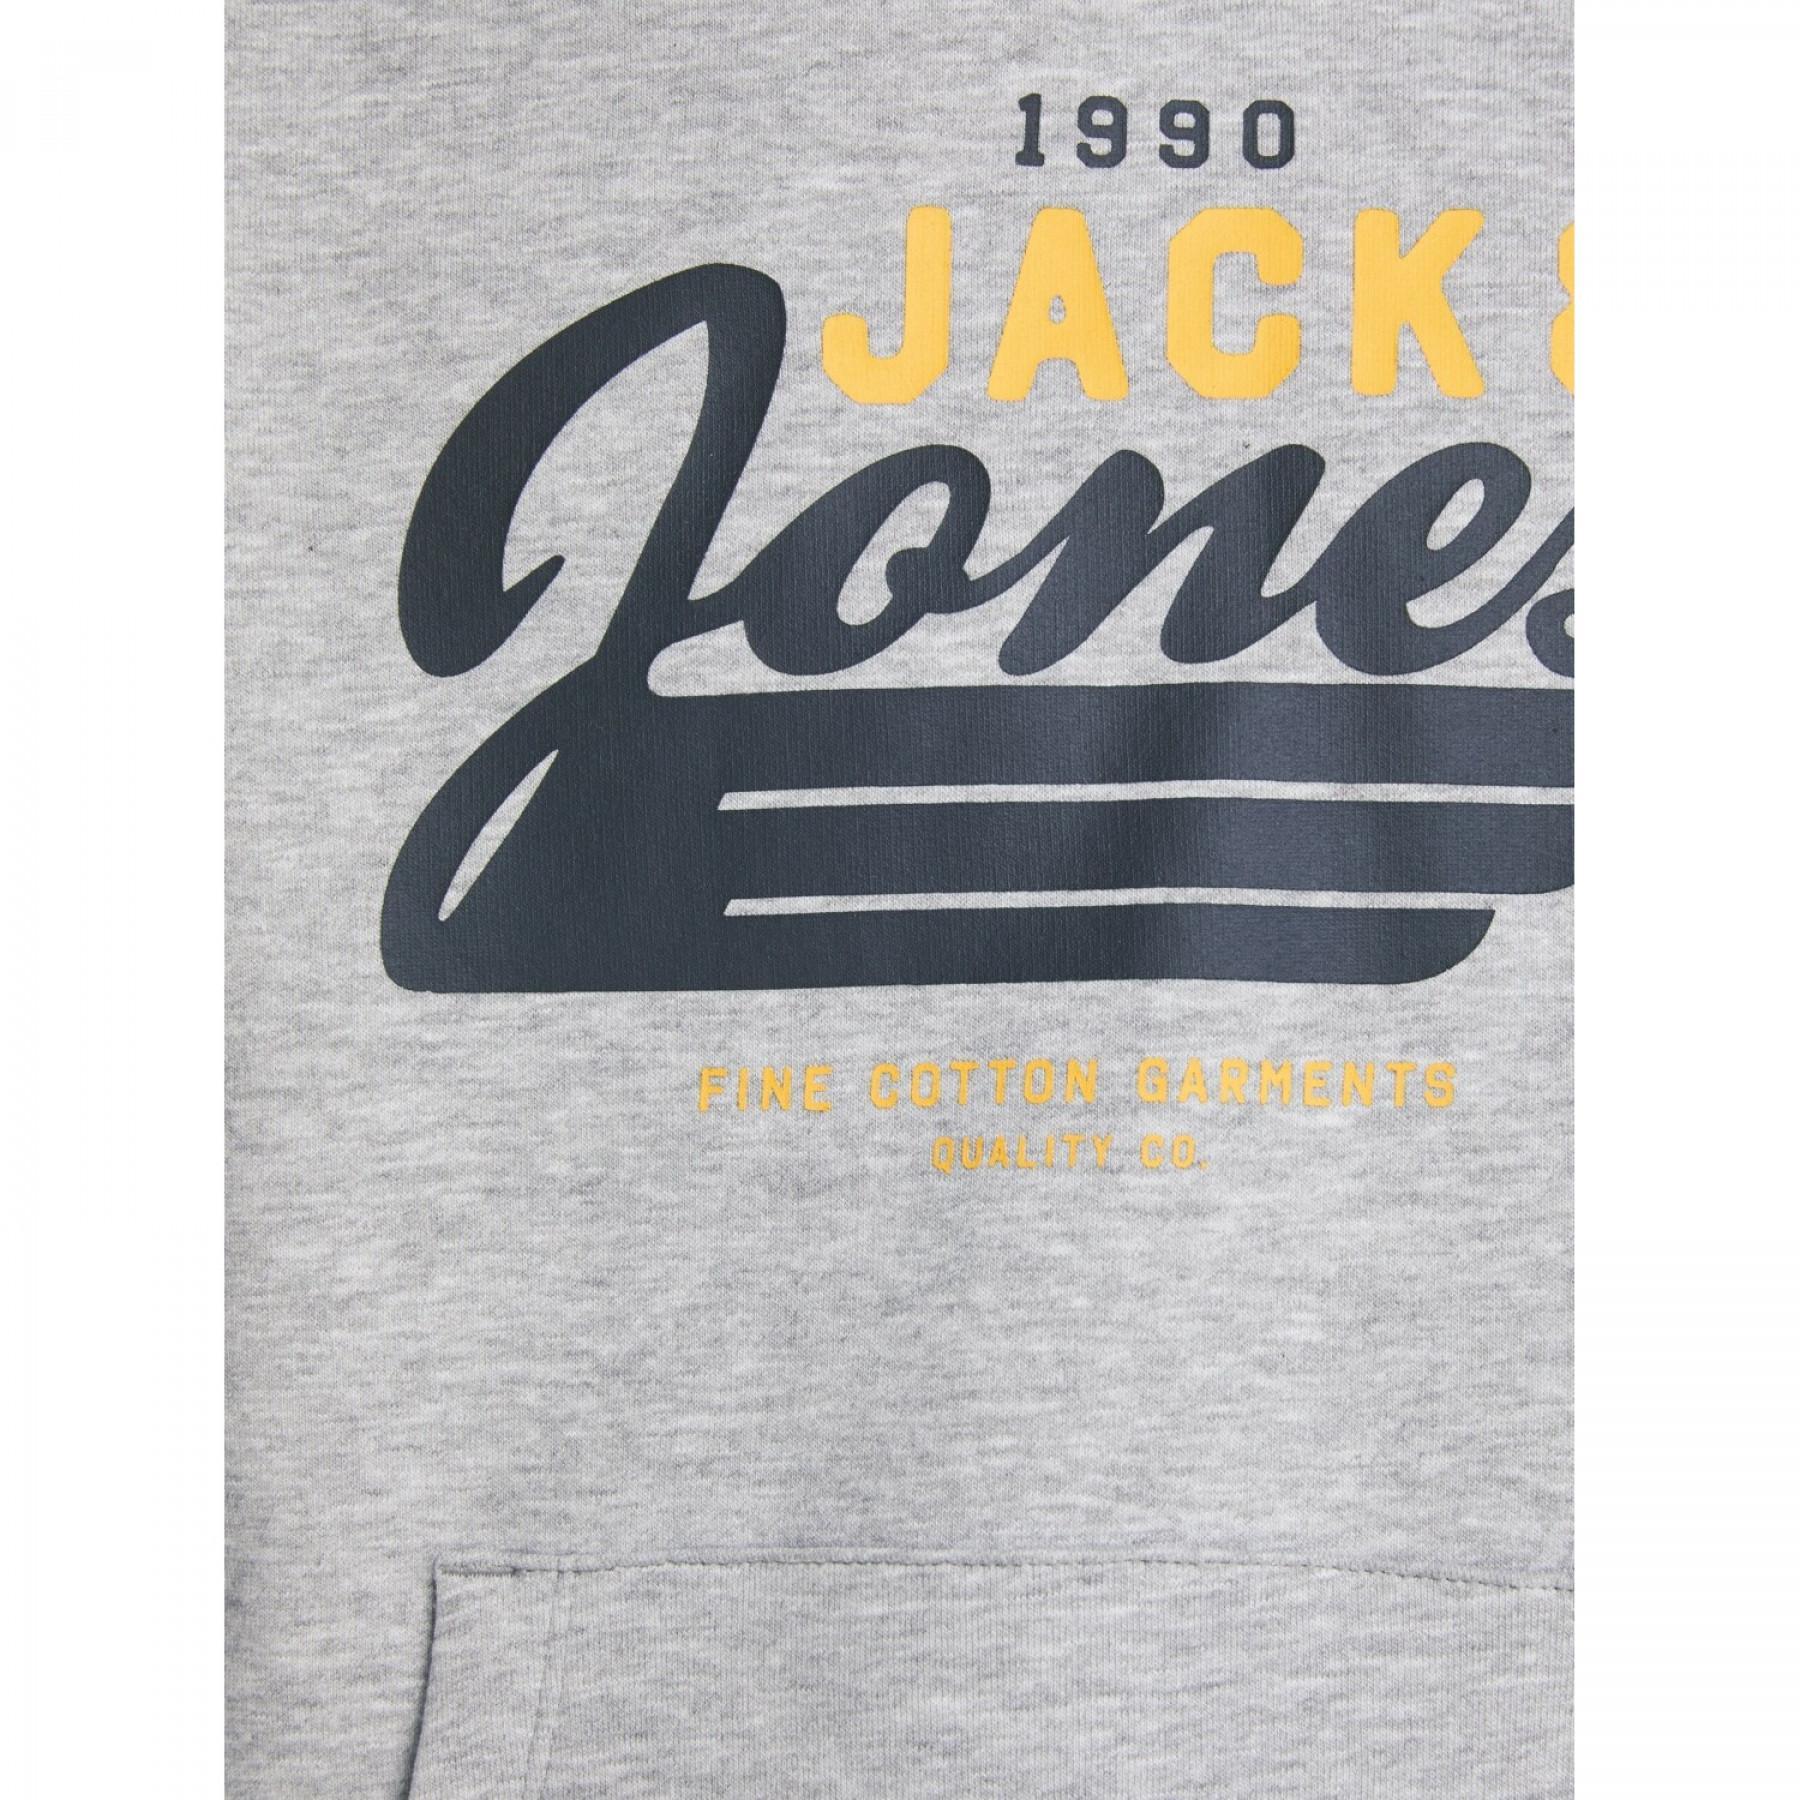 Felpa con cappuccio per bambini Jack & Jones Logo